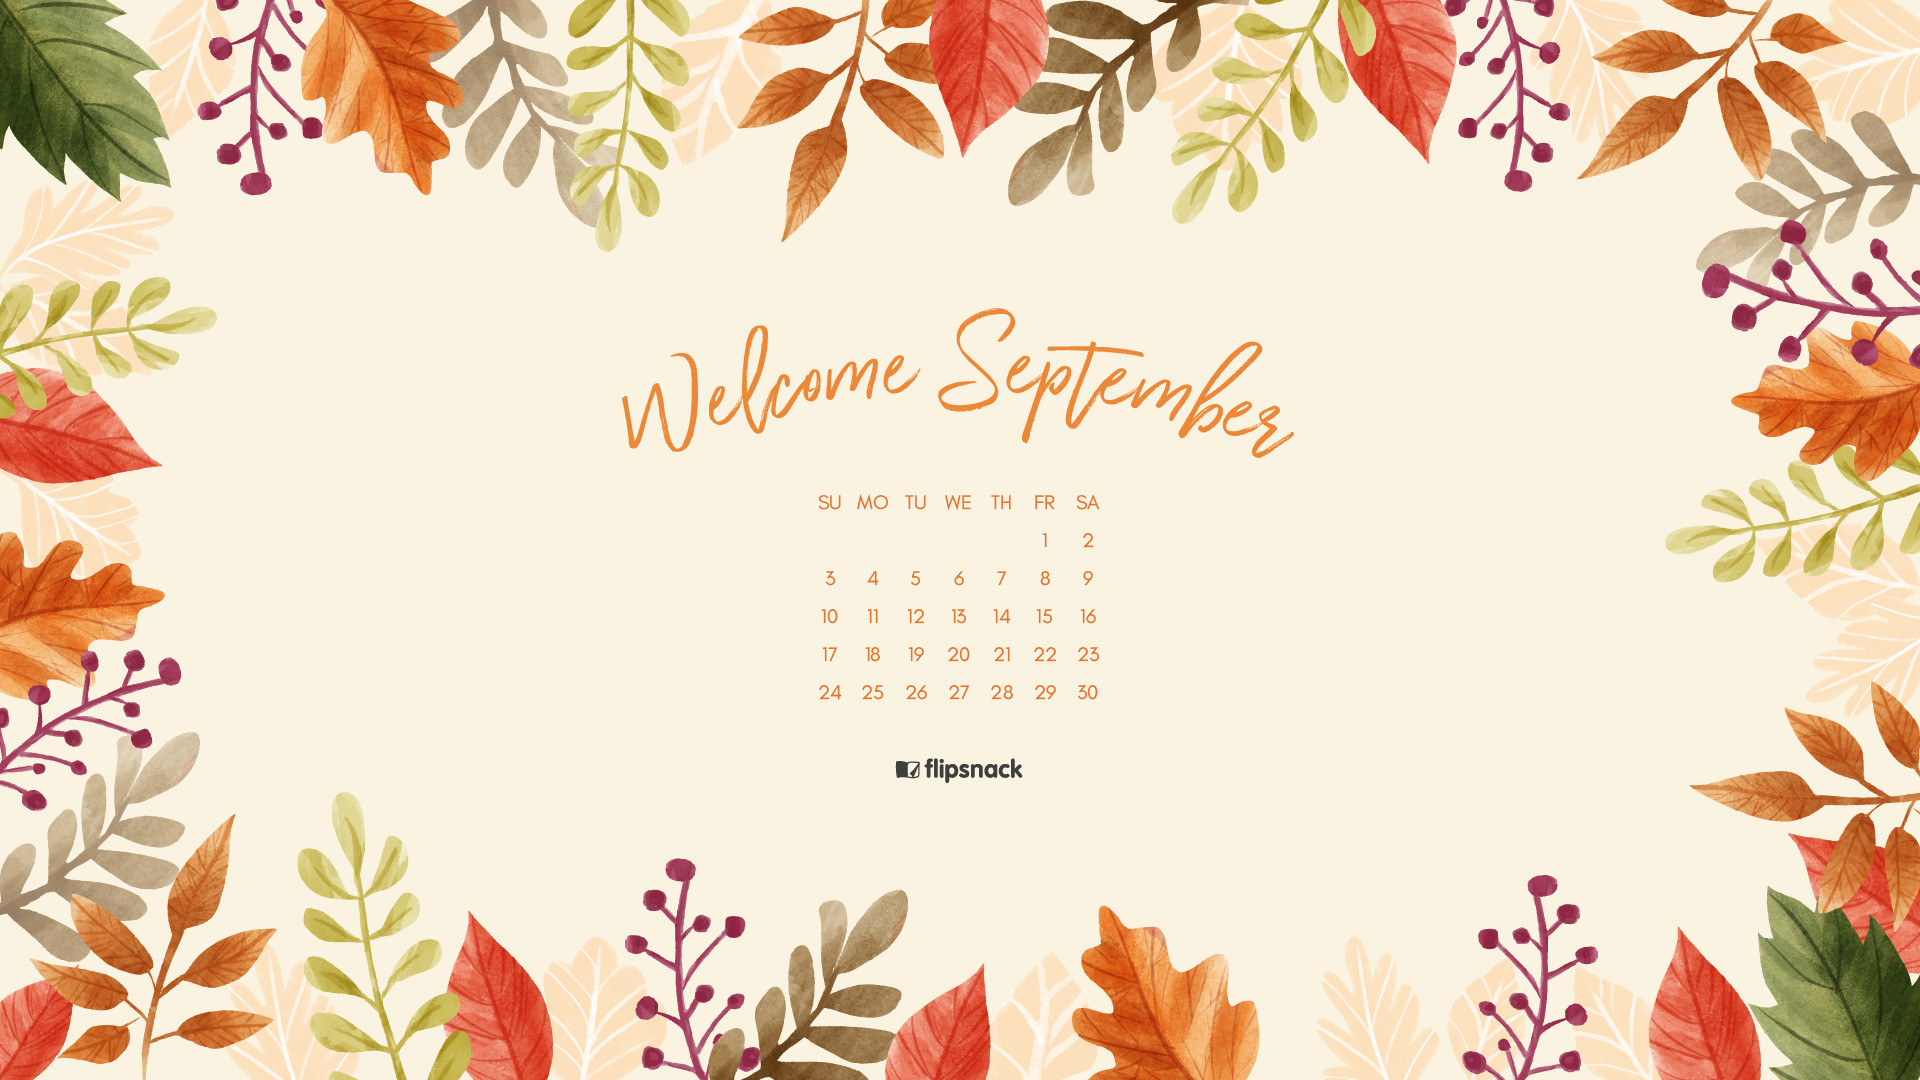 1920x1080 Your September 2017 calendar wallpaper is here. Get it!